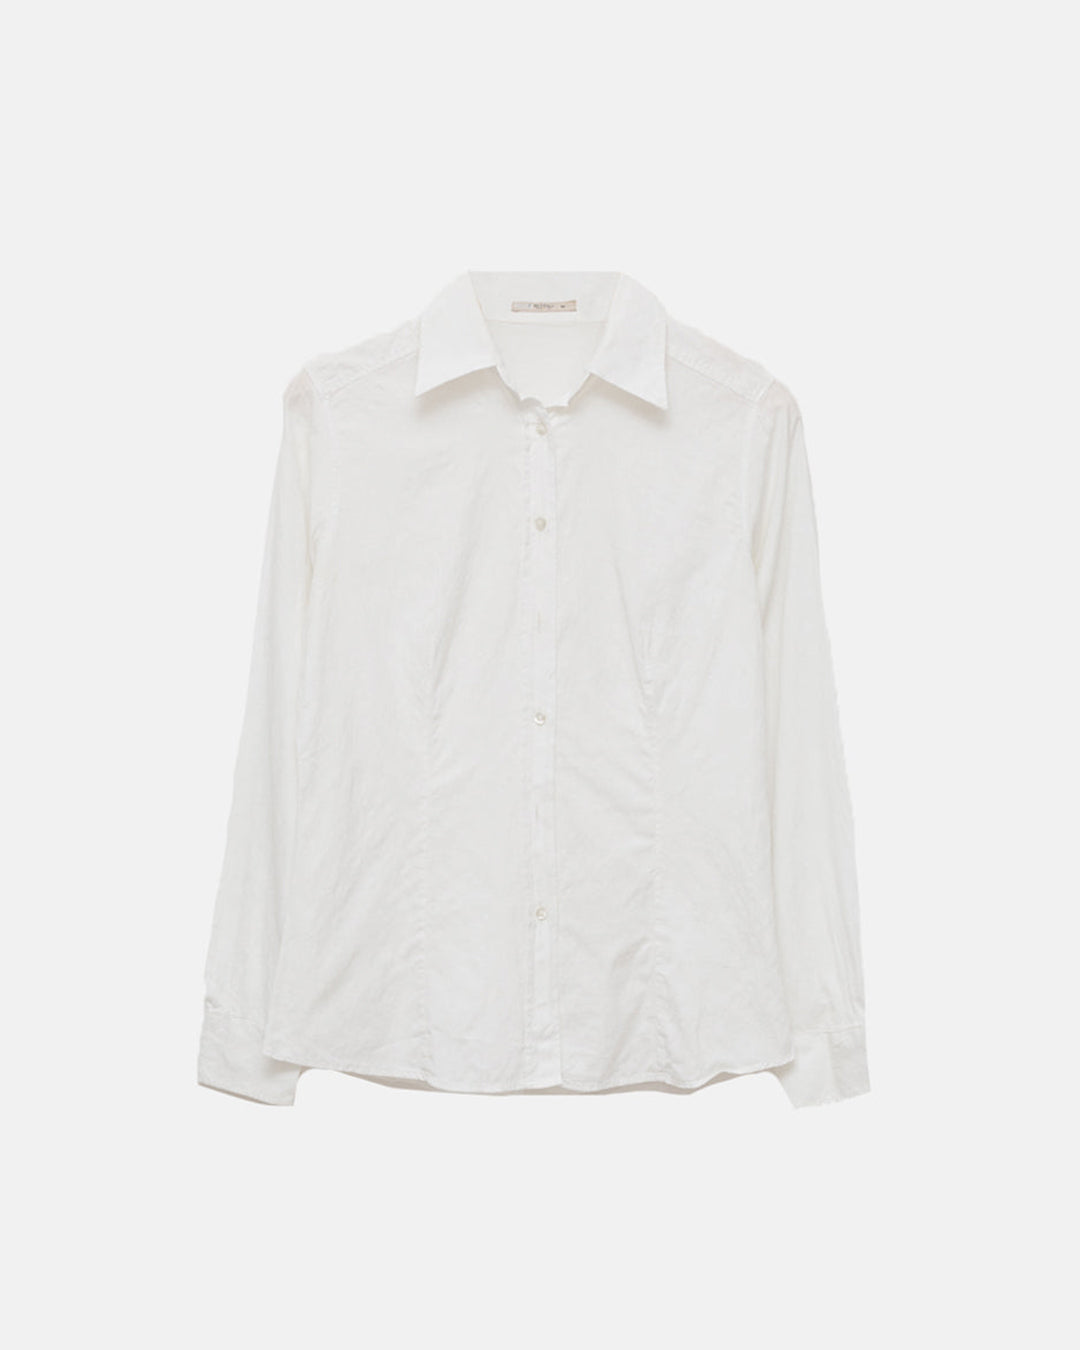 Etro minimalist white shirt